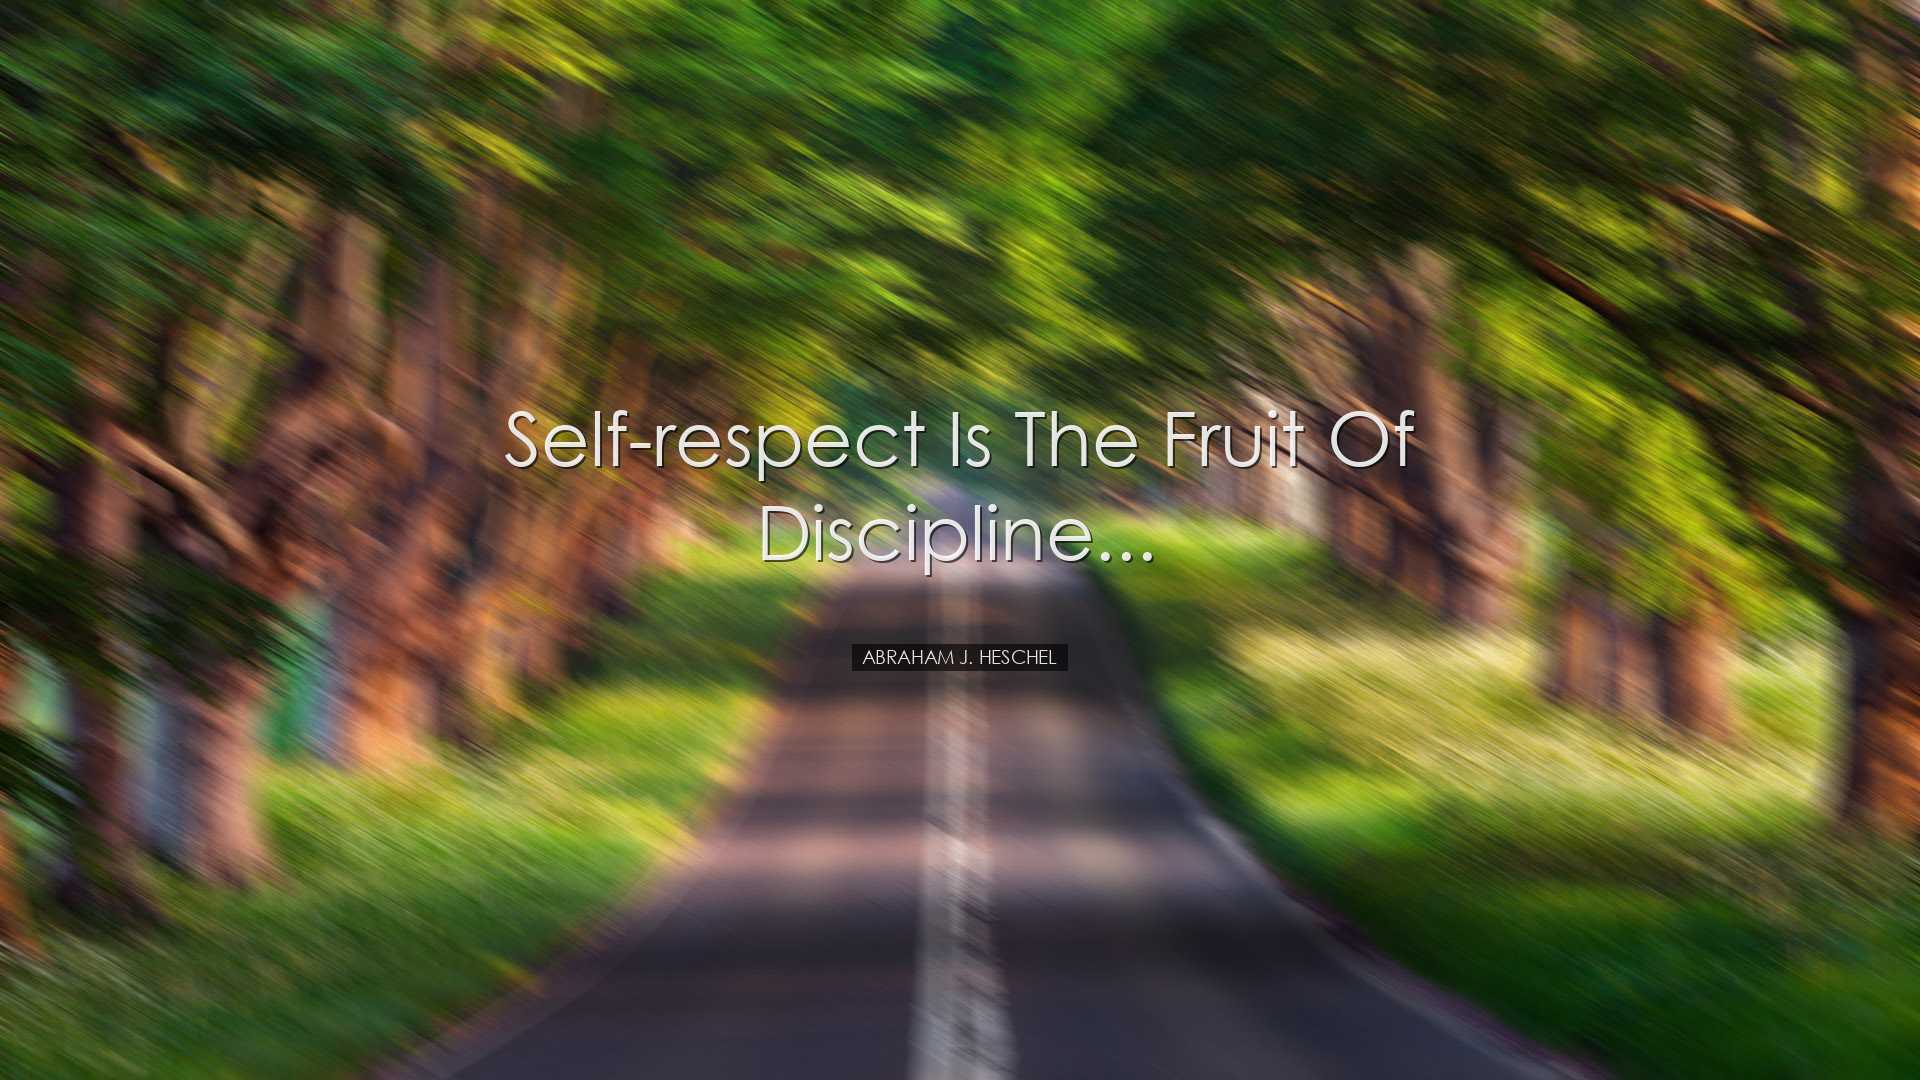 Self-respect is the fruit of discipline... - Abraham J. Heschel